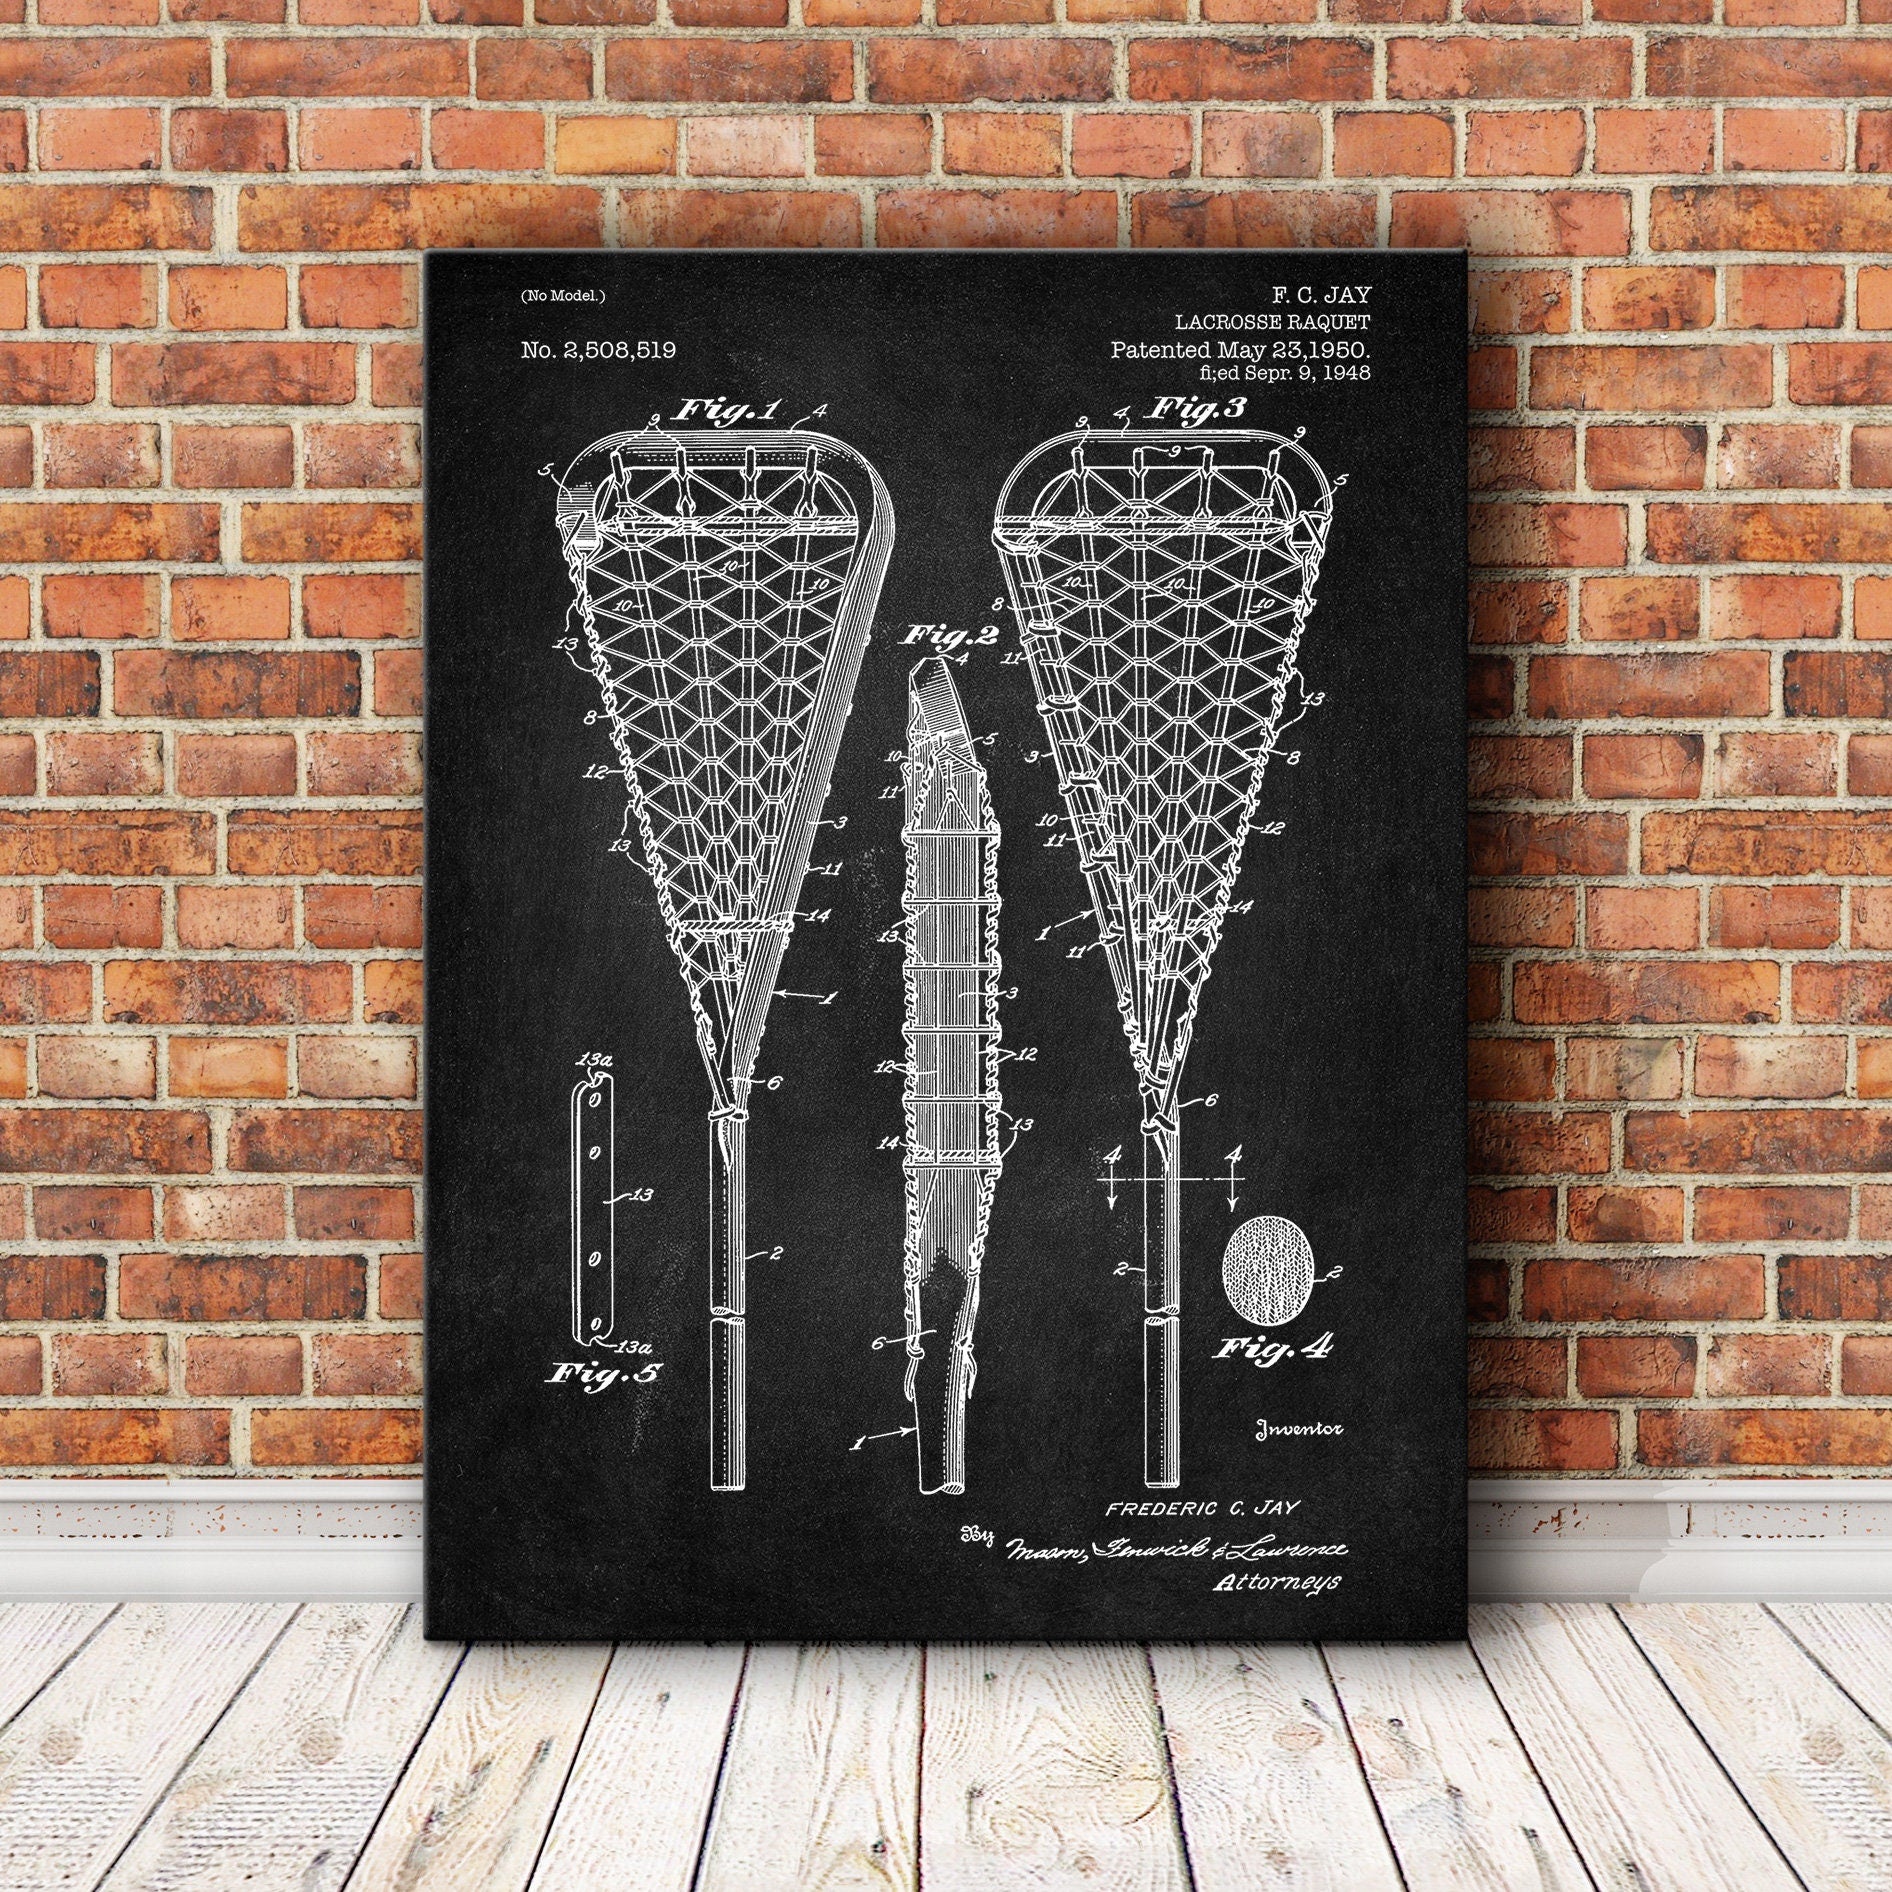 Sports Patent print, Lacrosse Raquet for Sports Patent print, Patent print, Patent print design, Vintage patent print, Sports Art